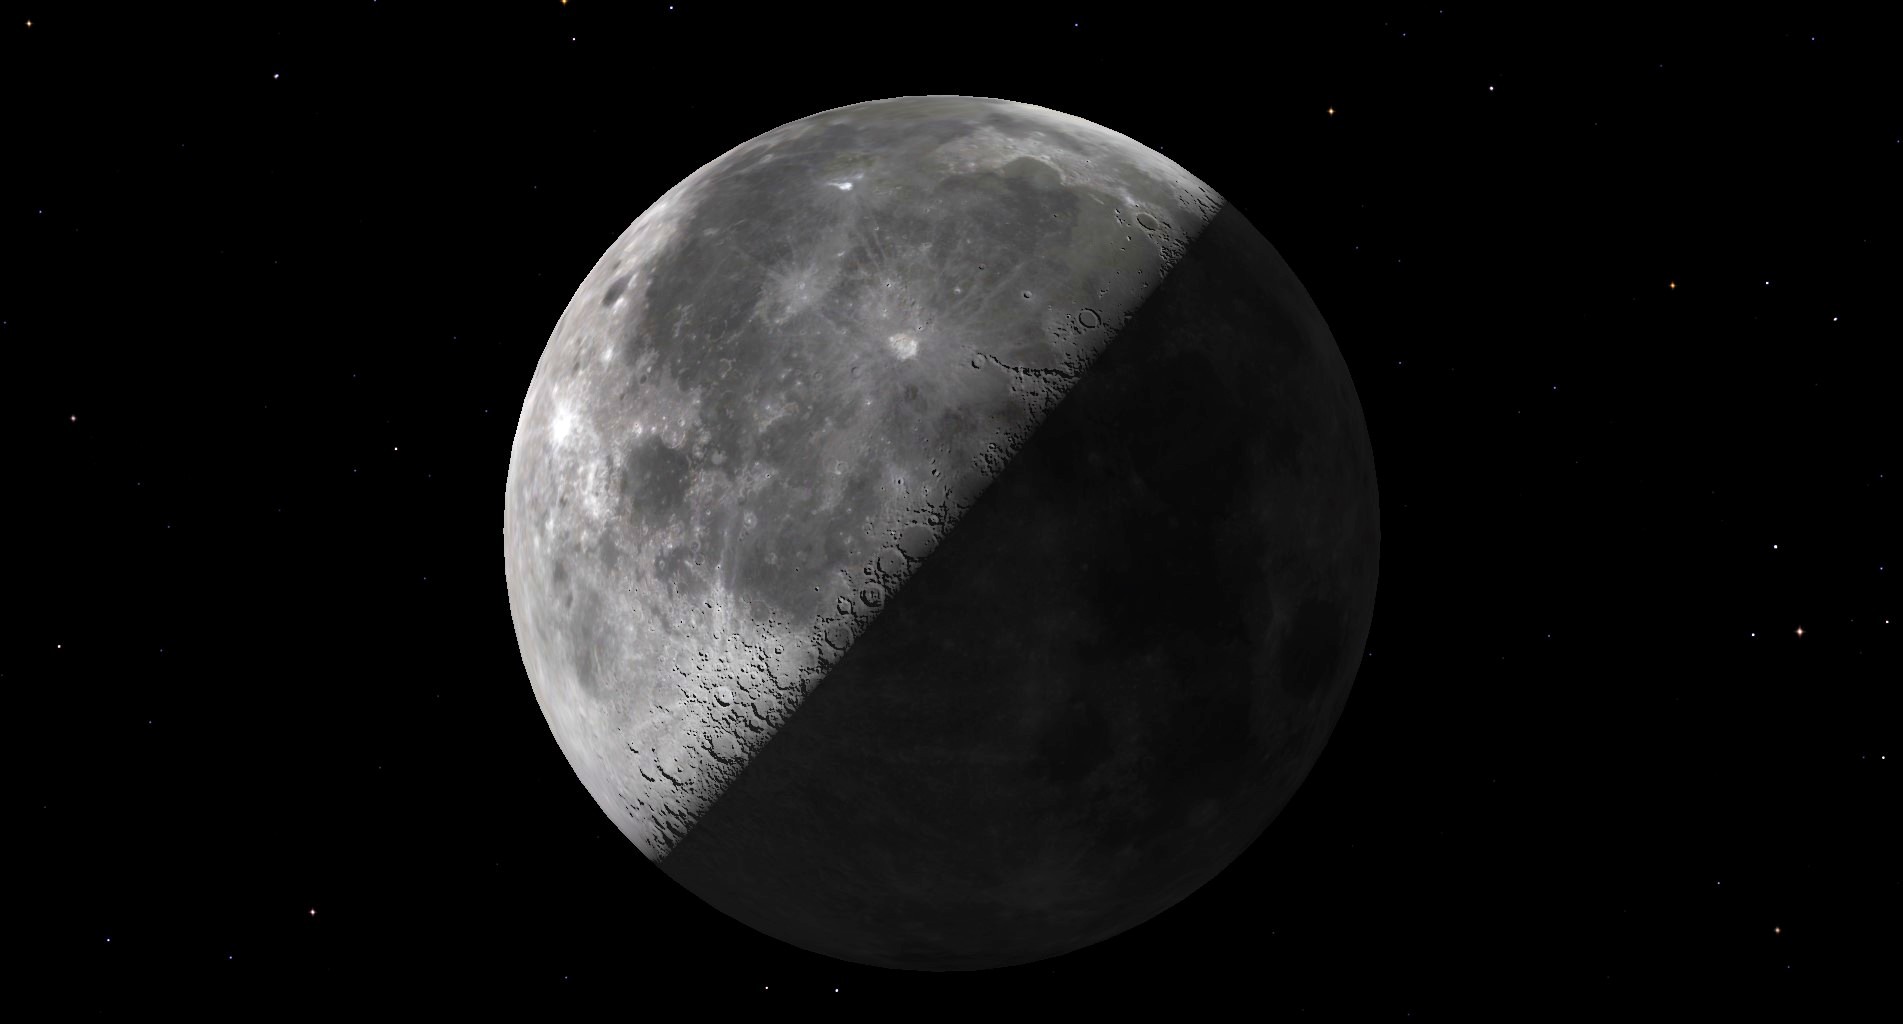 Third Quarter Moon (at 17:15 GMT)